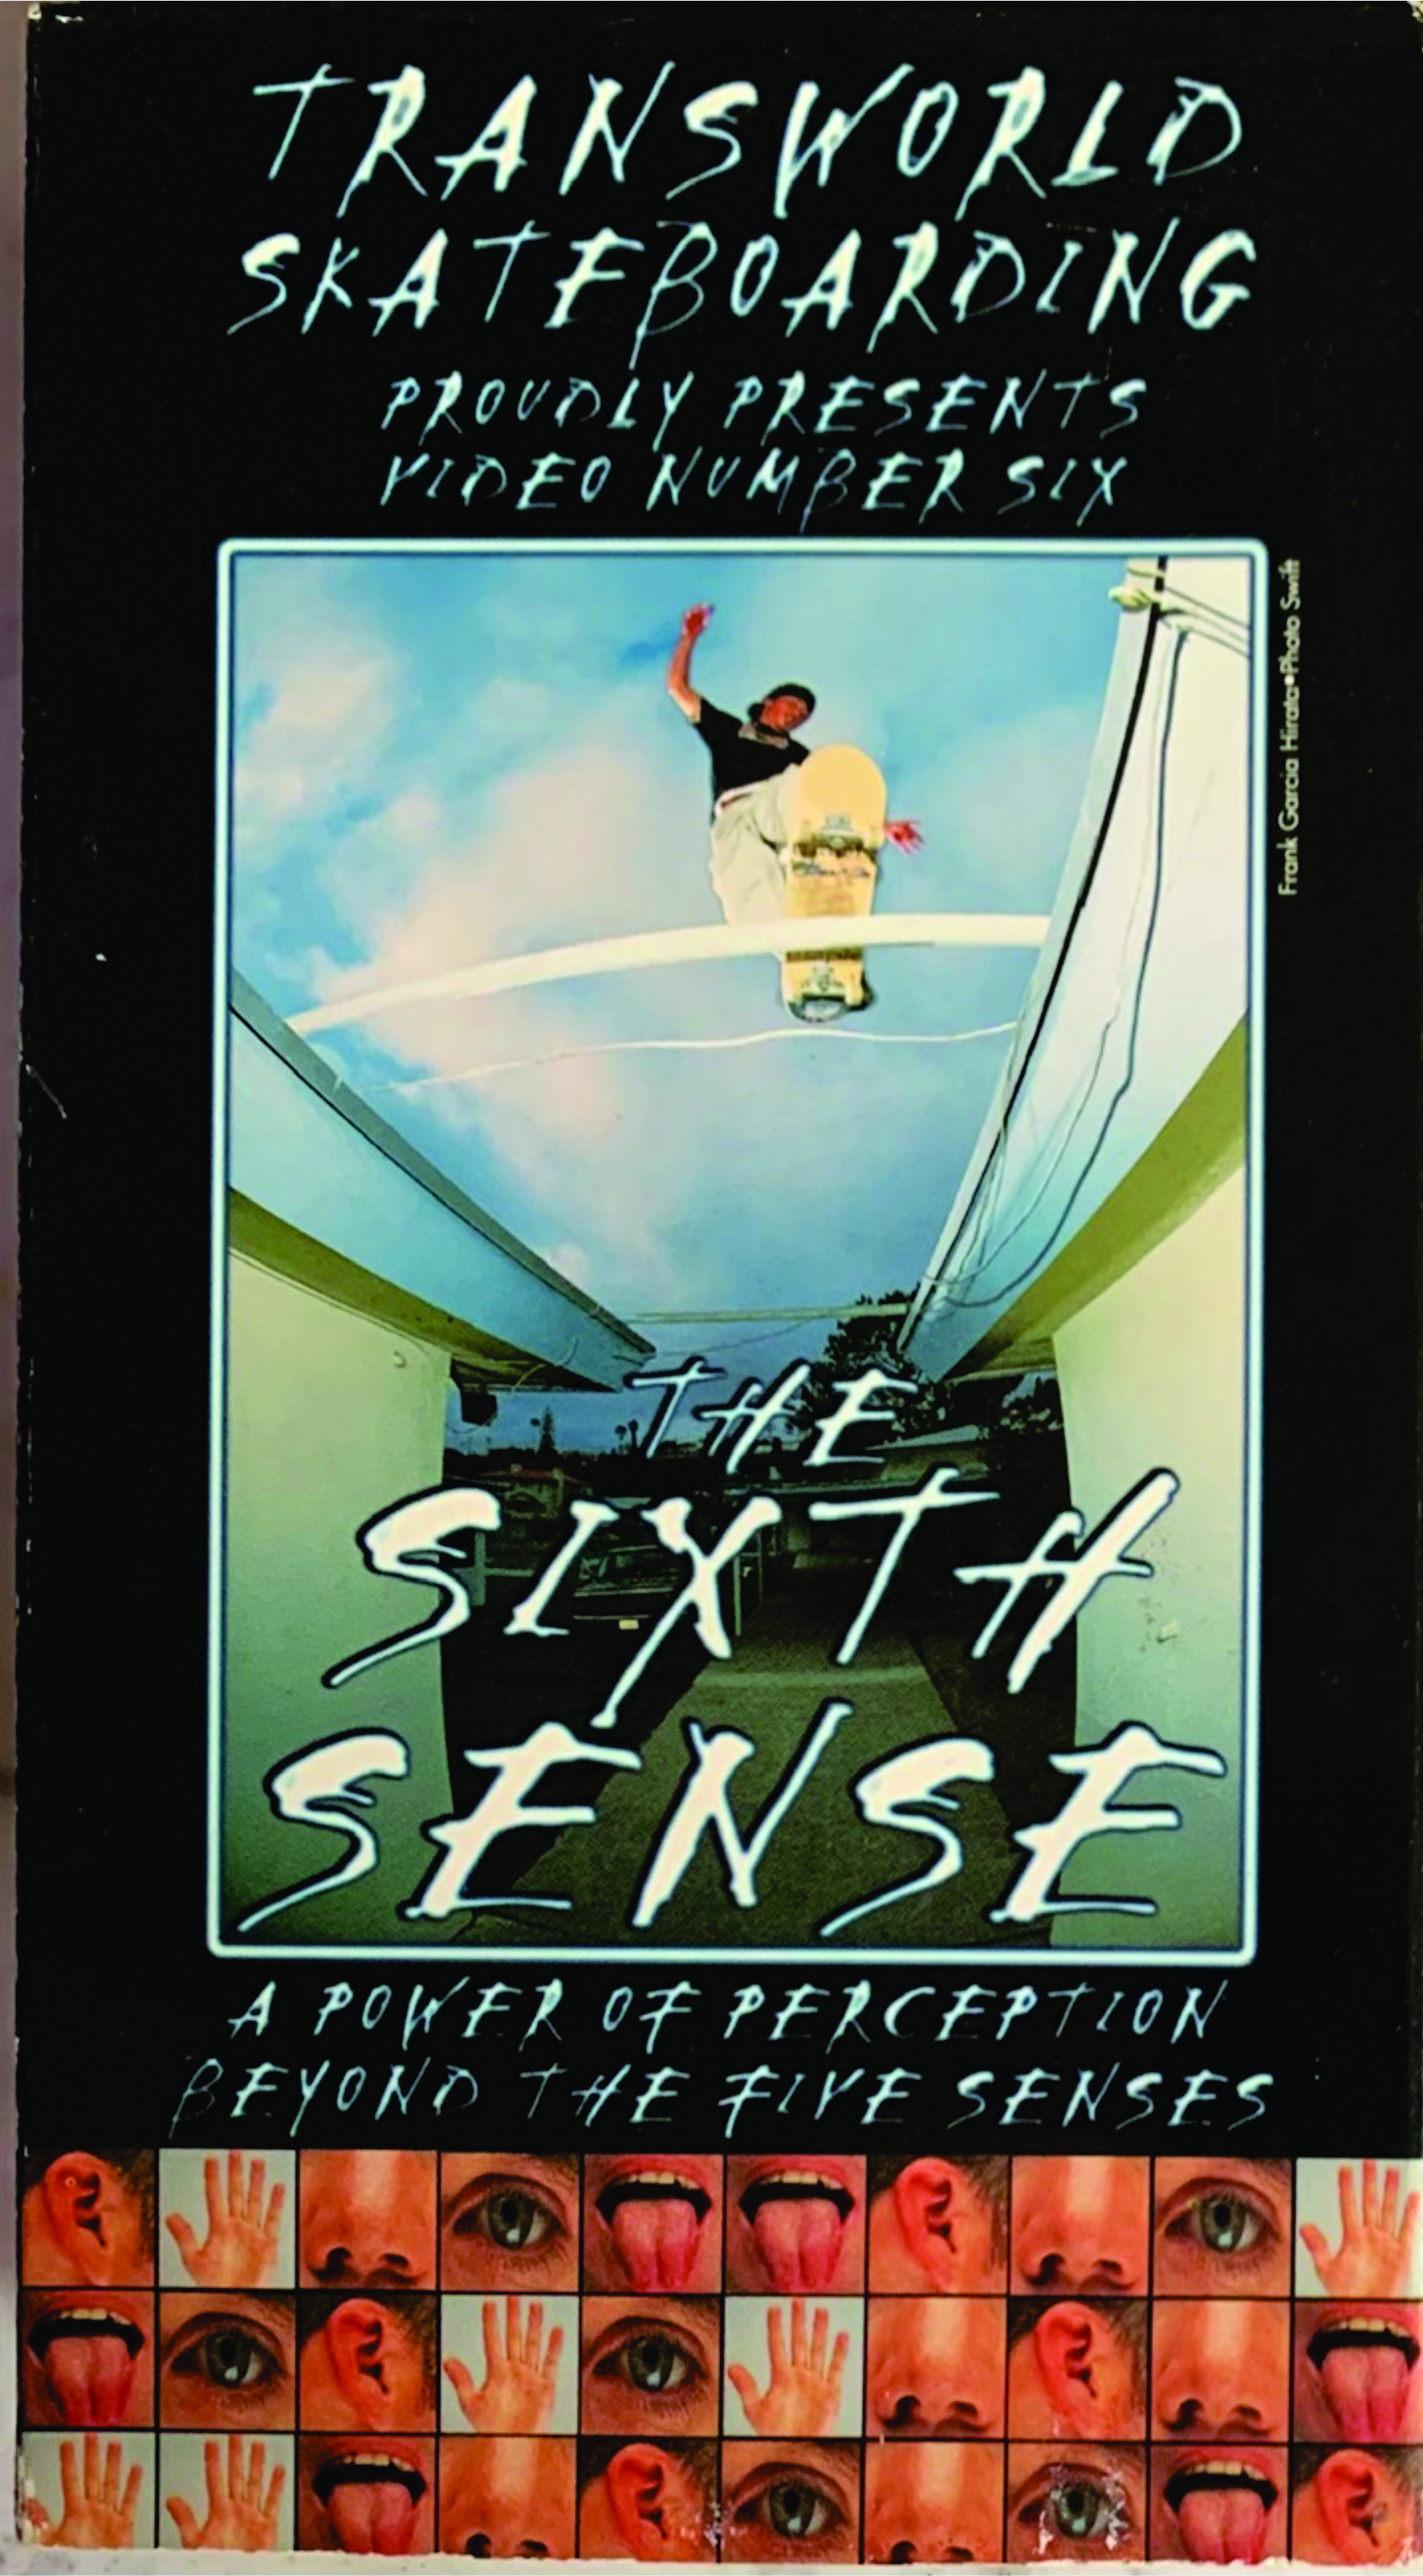 Transworld - The Sixth Sense cover art